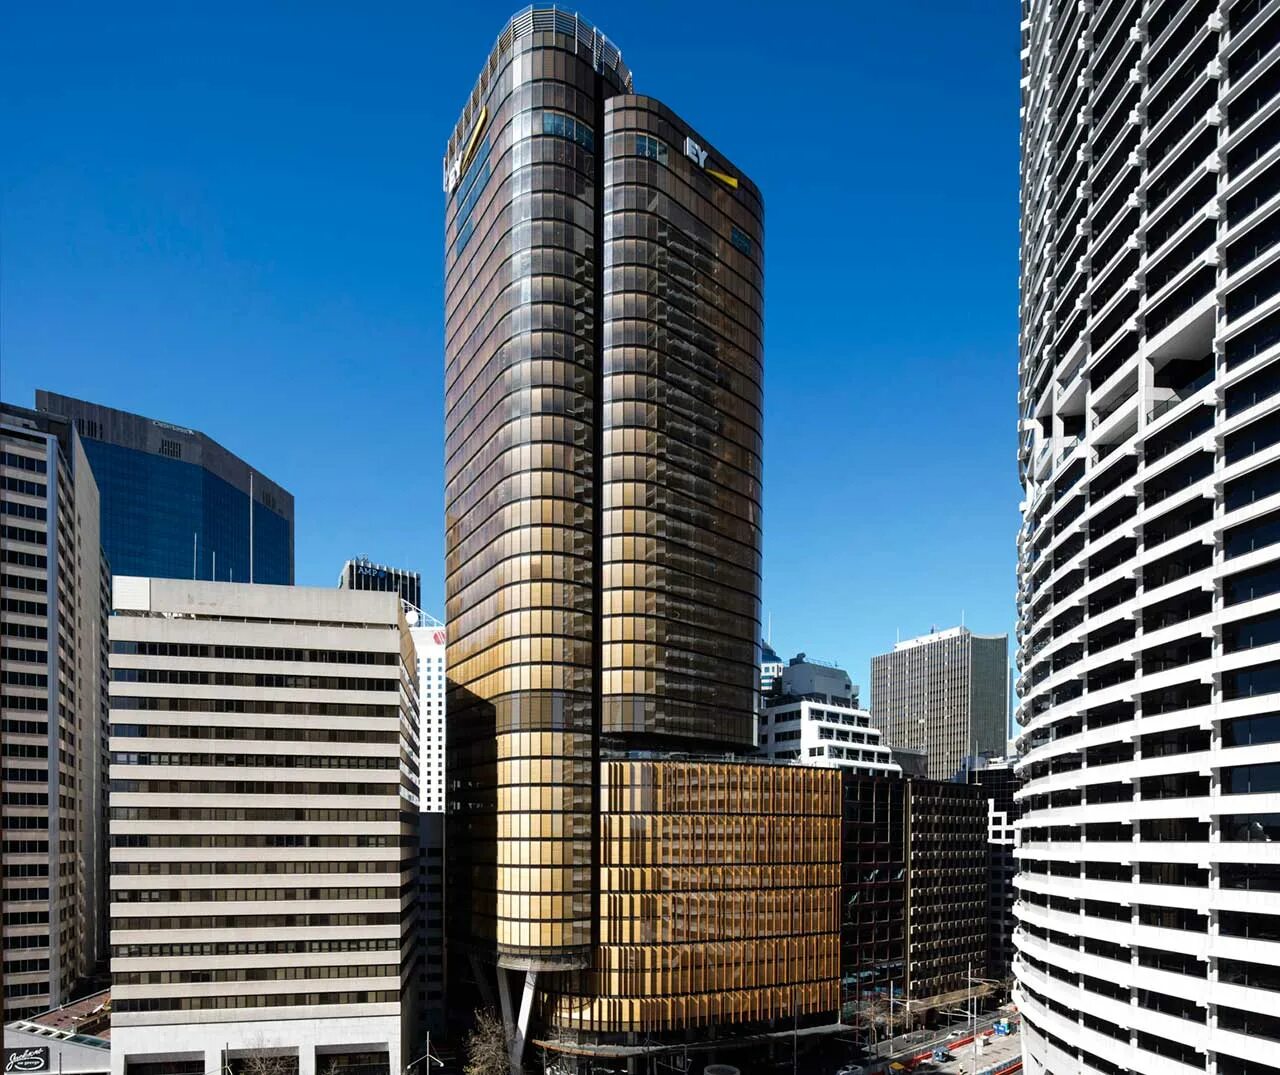 Tall buildings. Tall skyscrapers in Sydney. ZR Performance здание. Санкорп Плейс здание в Сиднее.